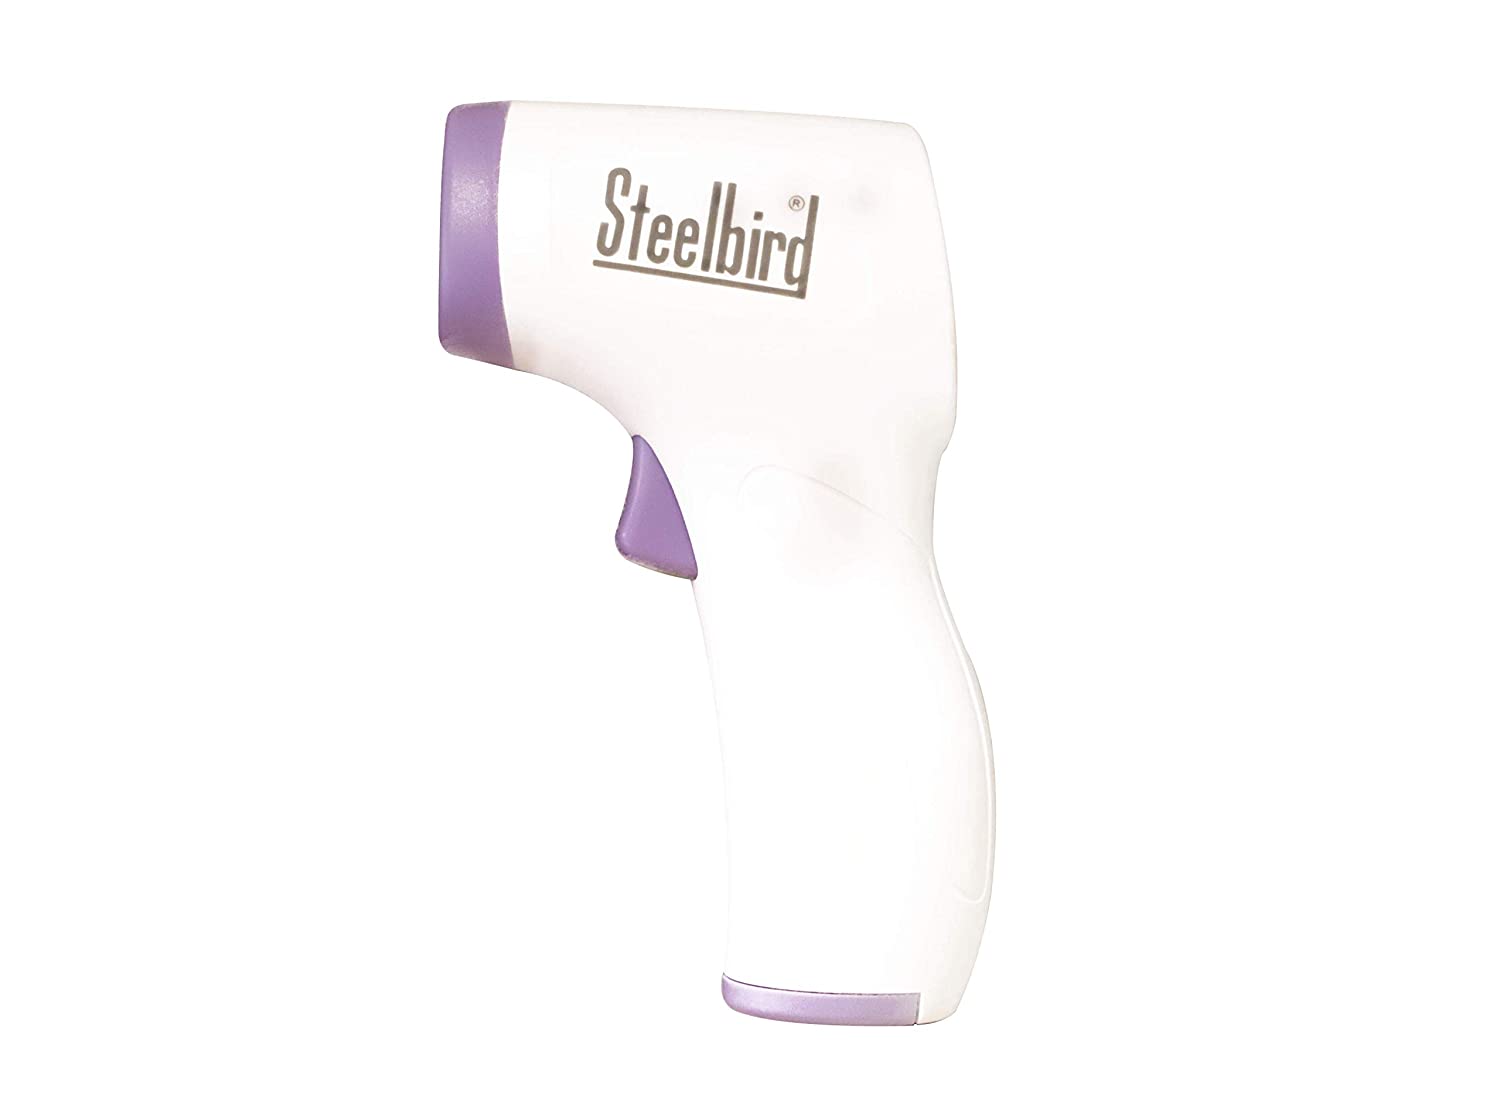 Steelbird Infrared Thermometer